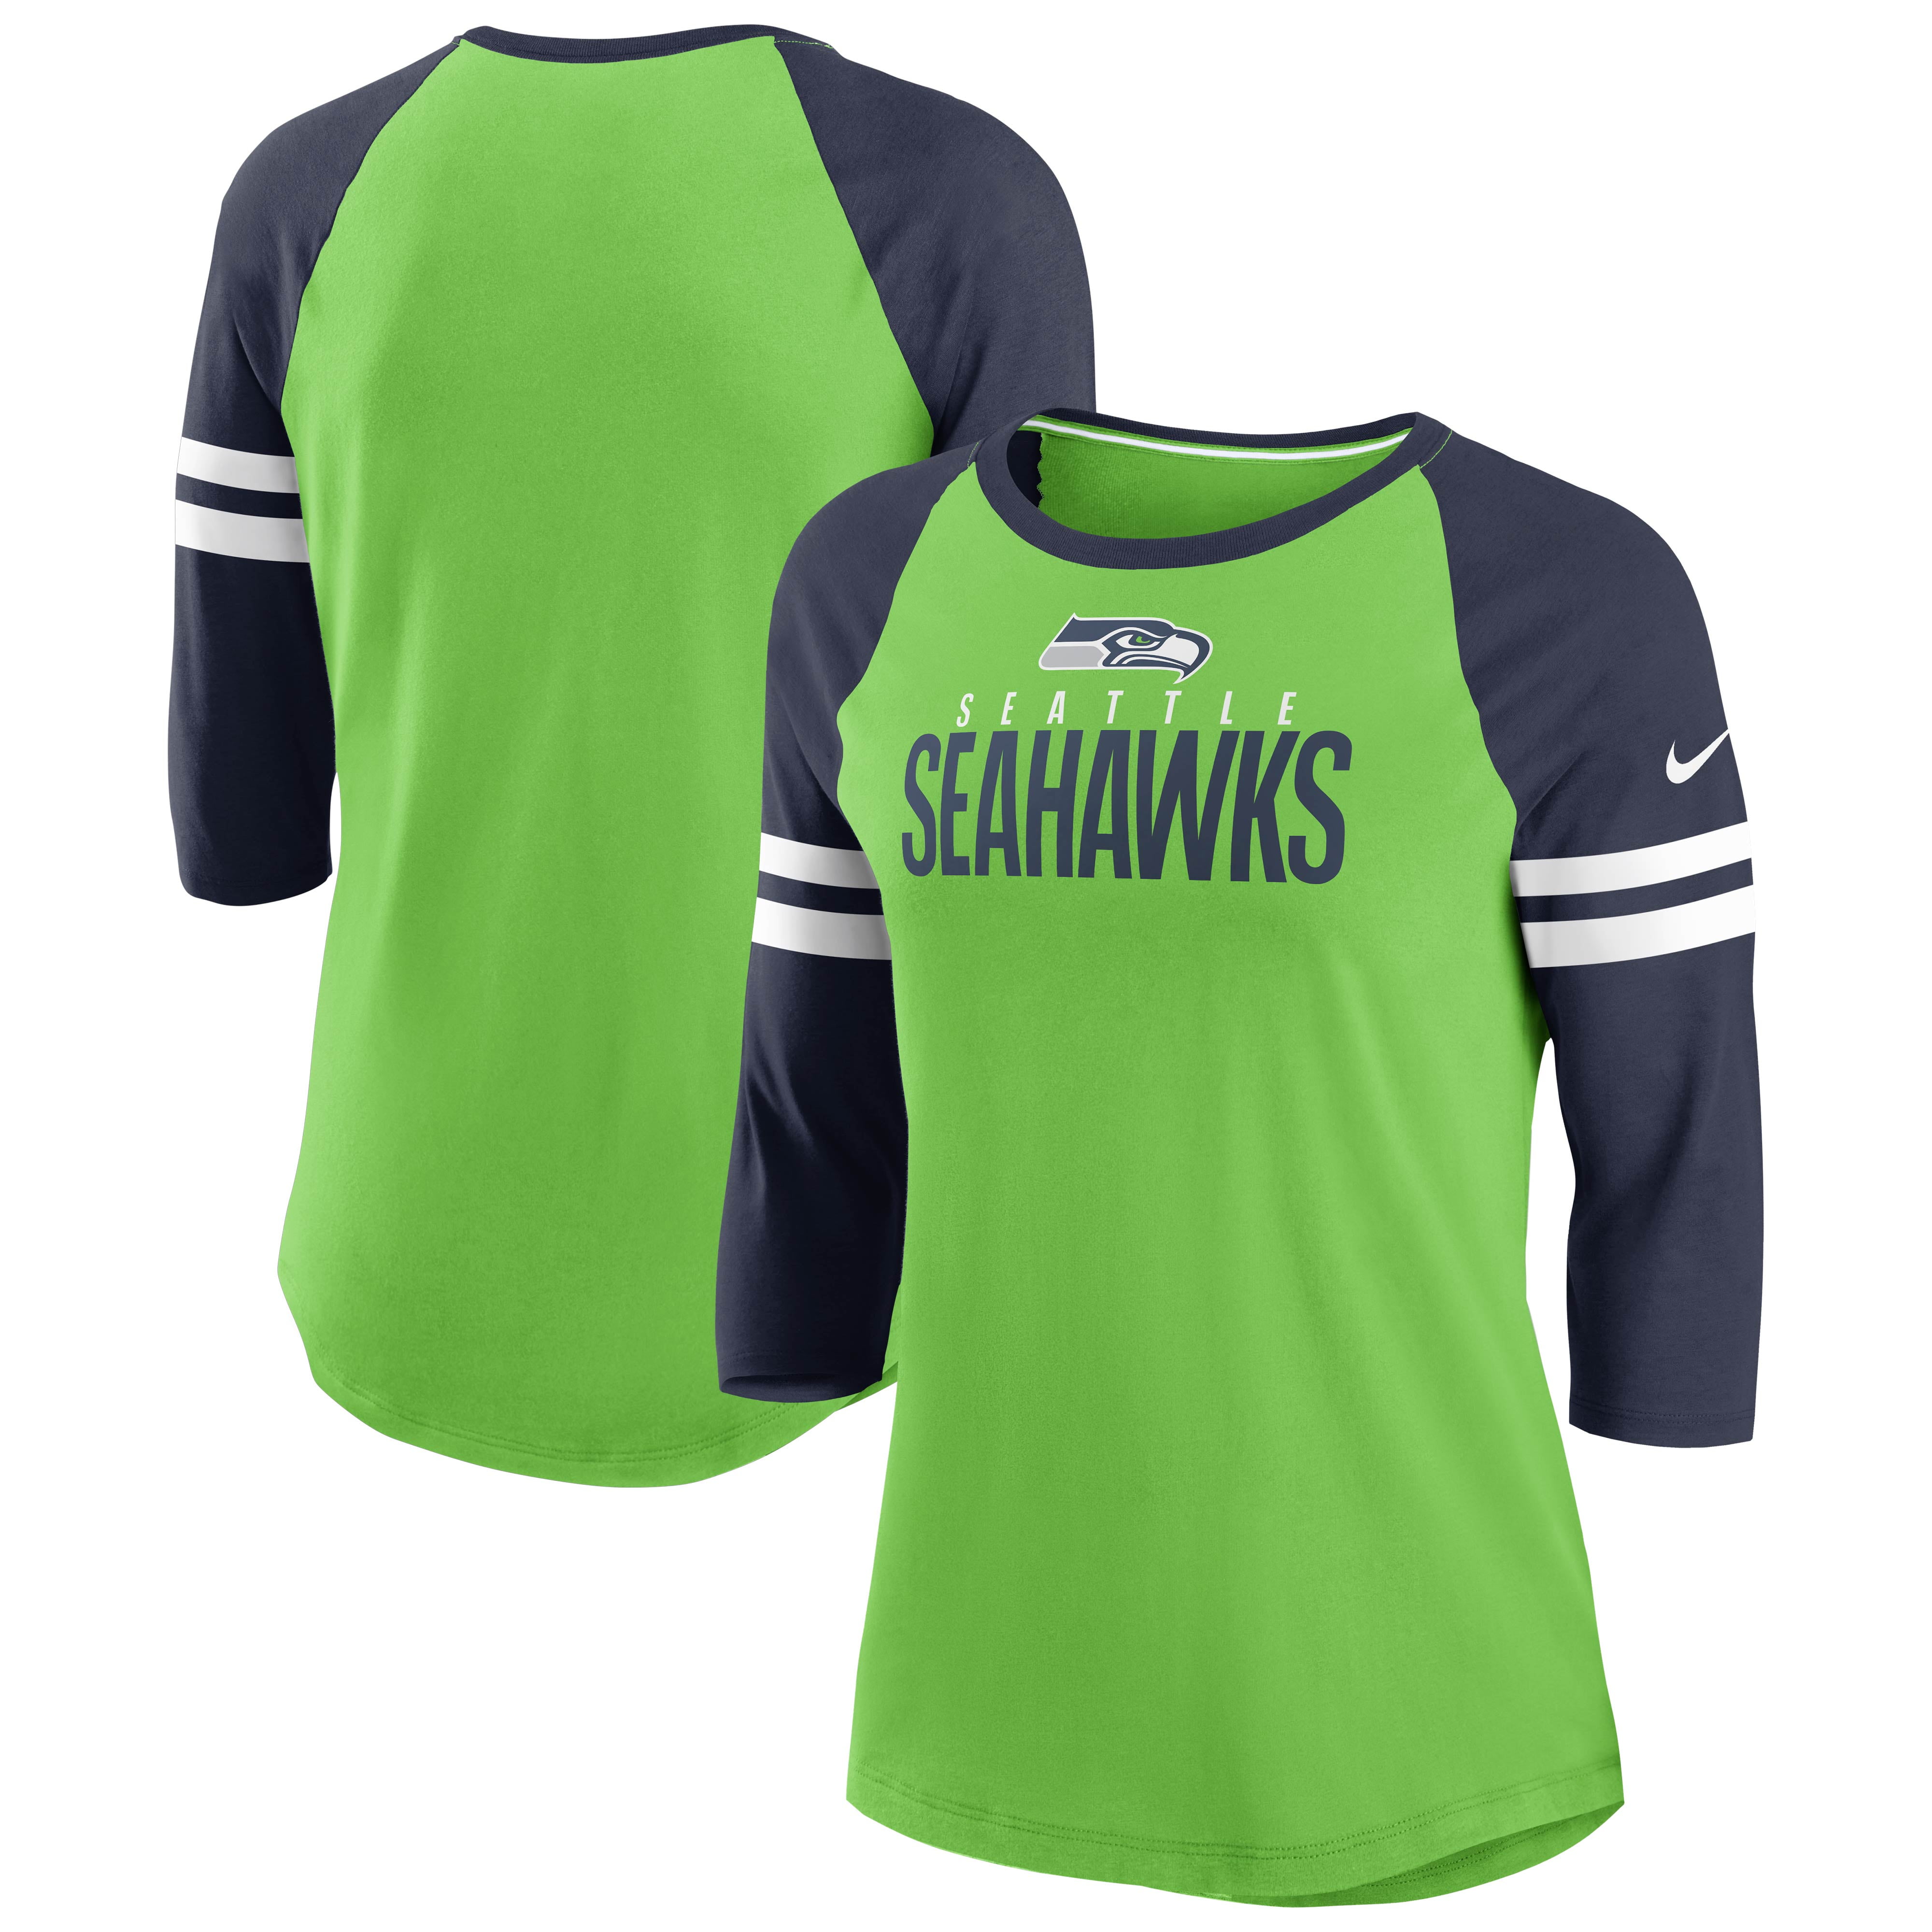 seahawks performance shirt